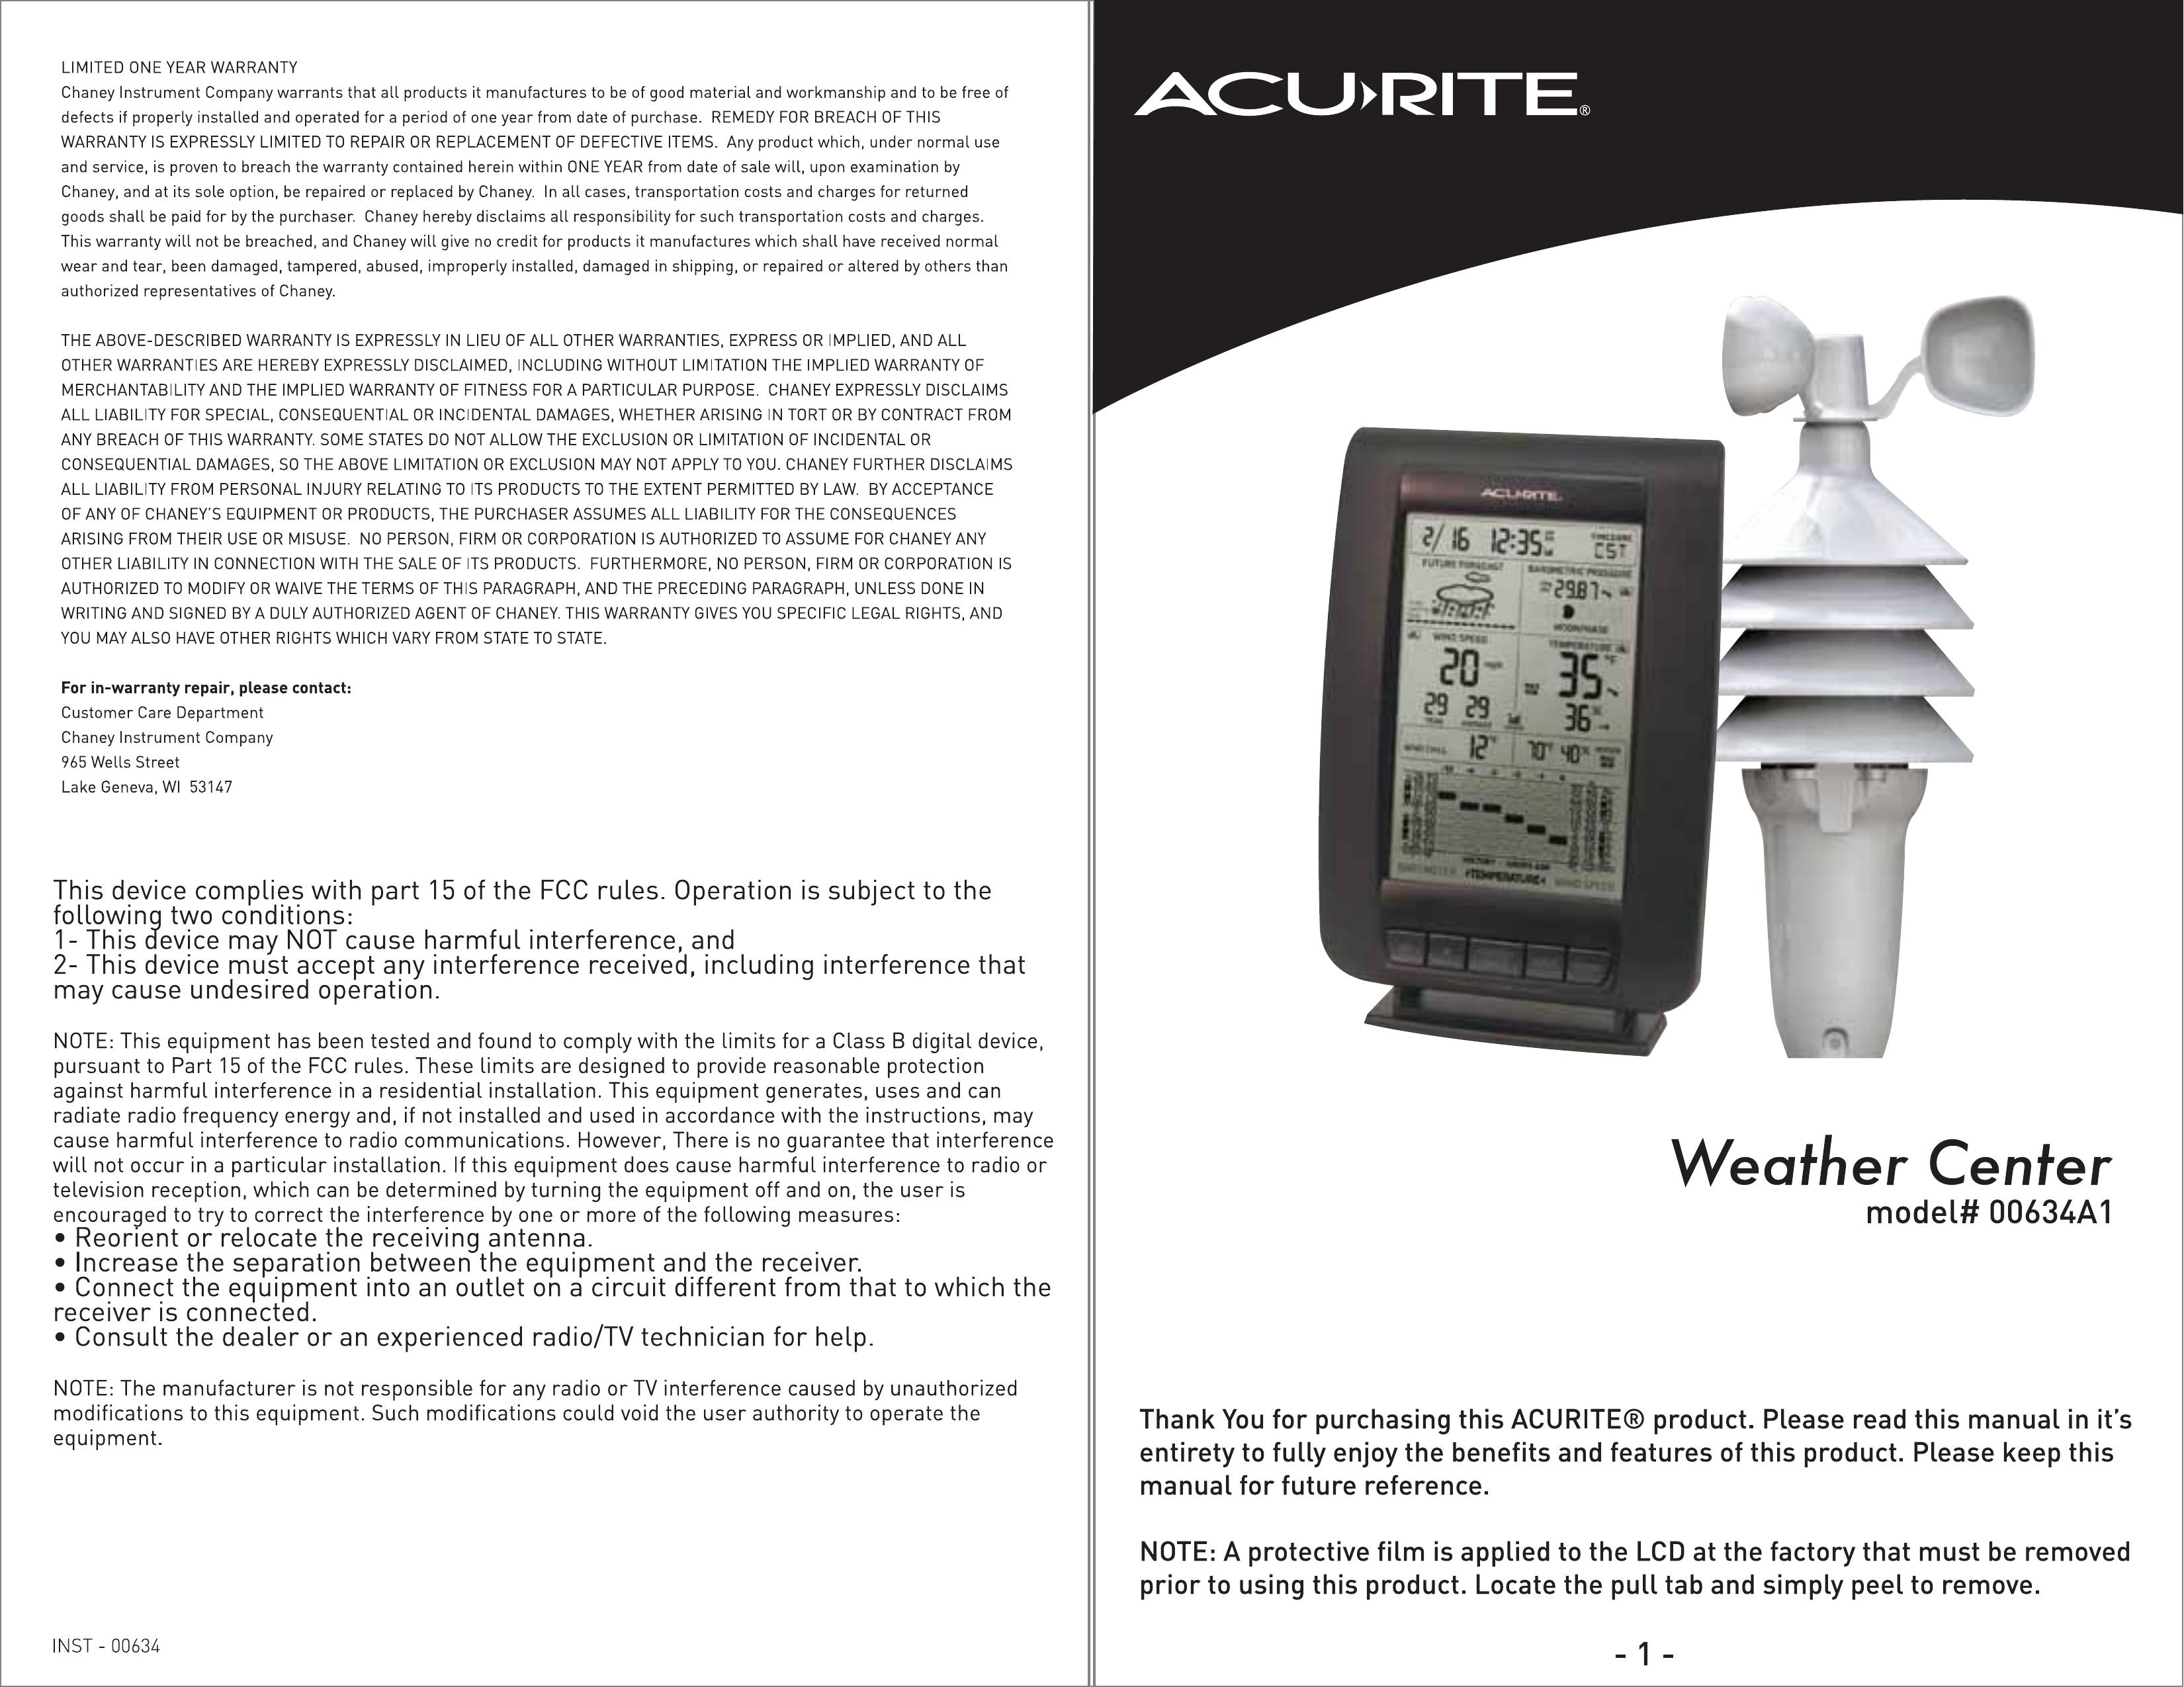 Acu-Rite 00634A1 Weather Radio User Manual